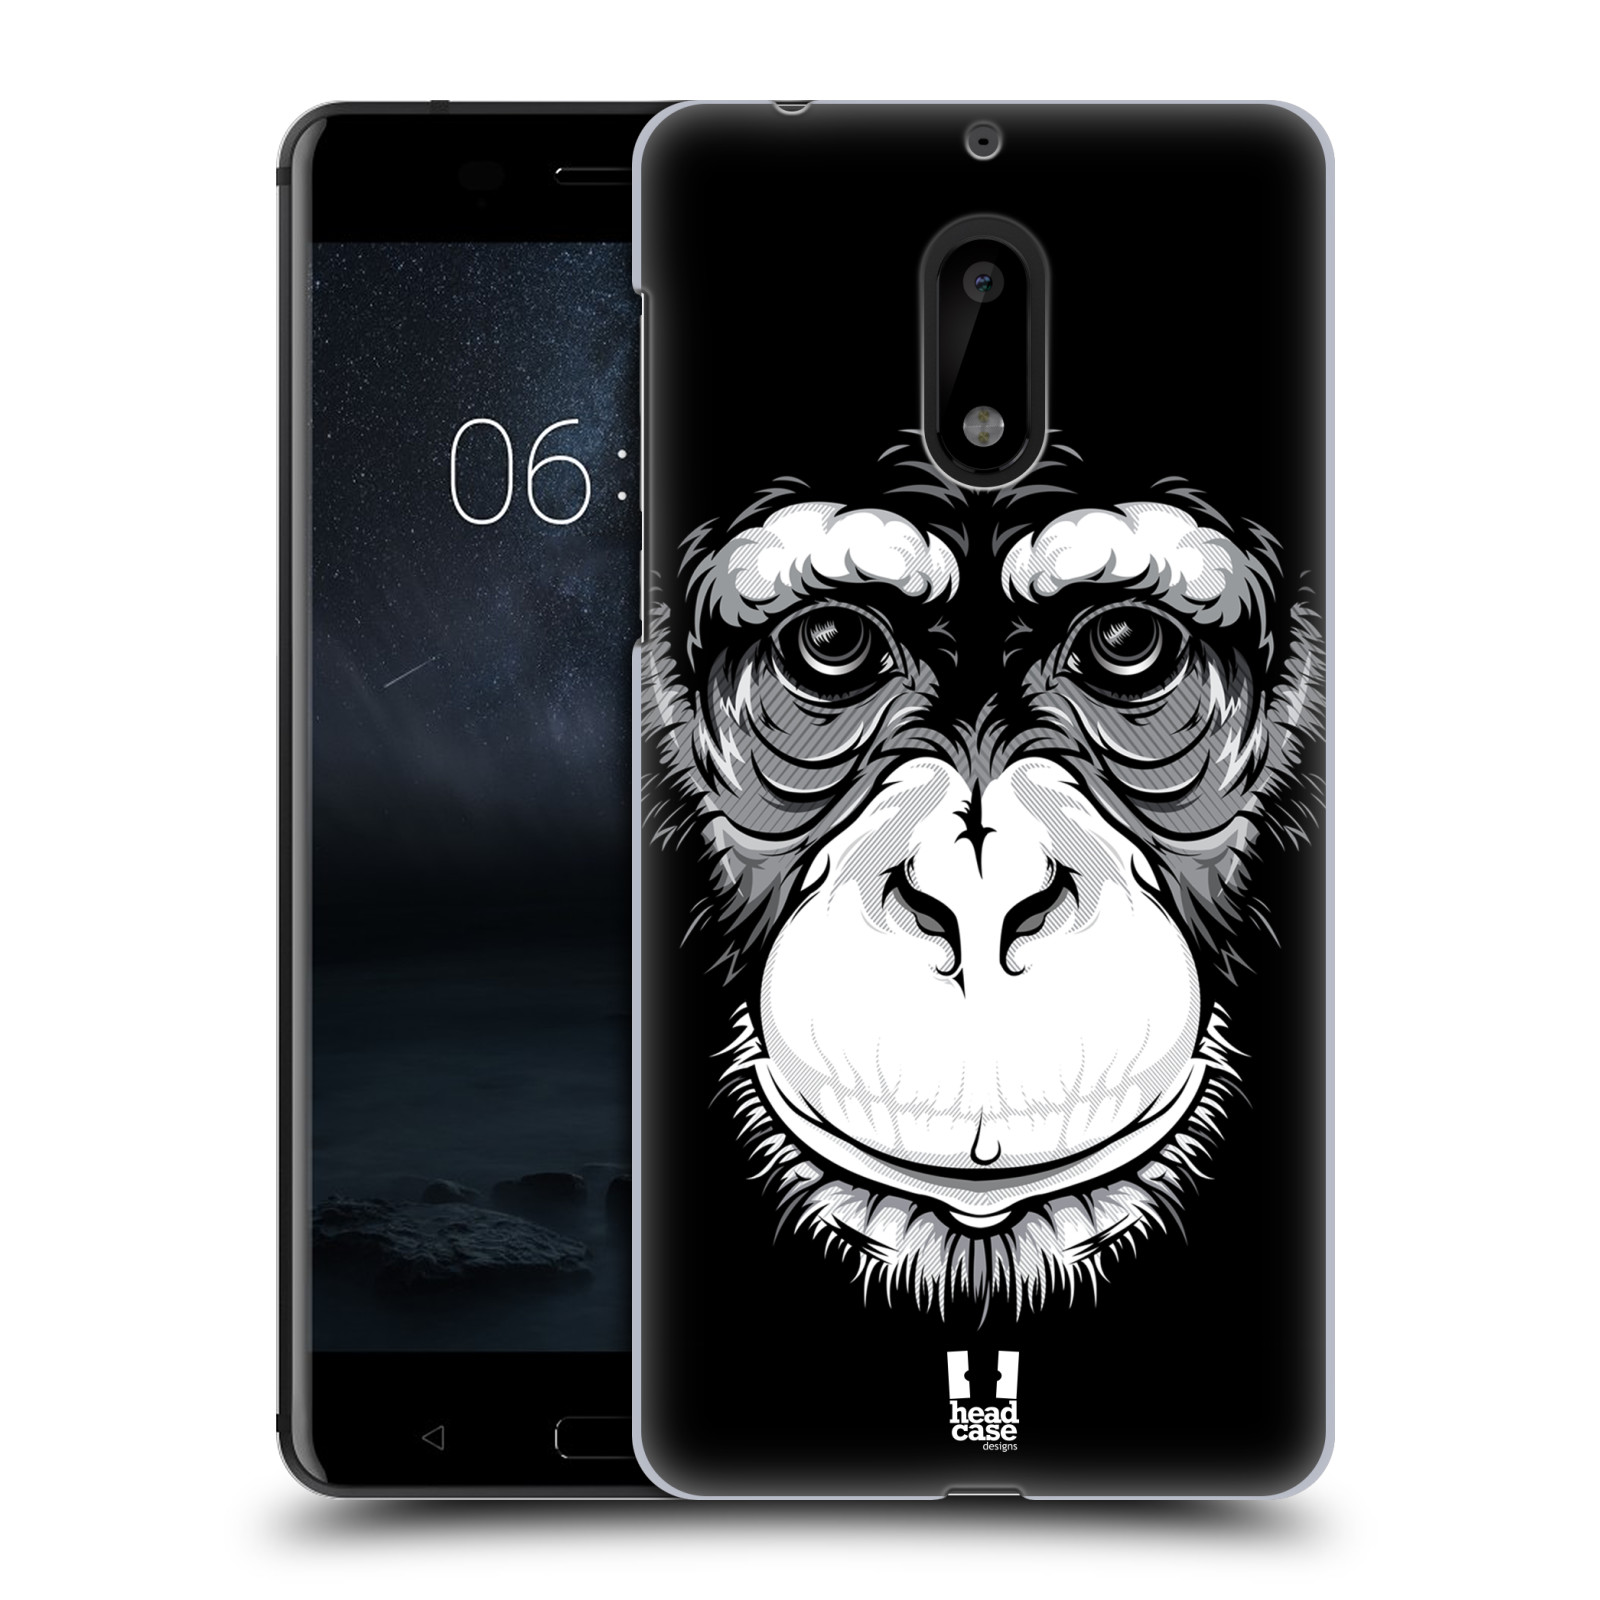 HEAD CASE plastový obal na mobil Nokia 6 vzor Zvíře kreslená tvář šimpanz